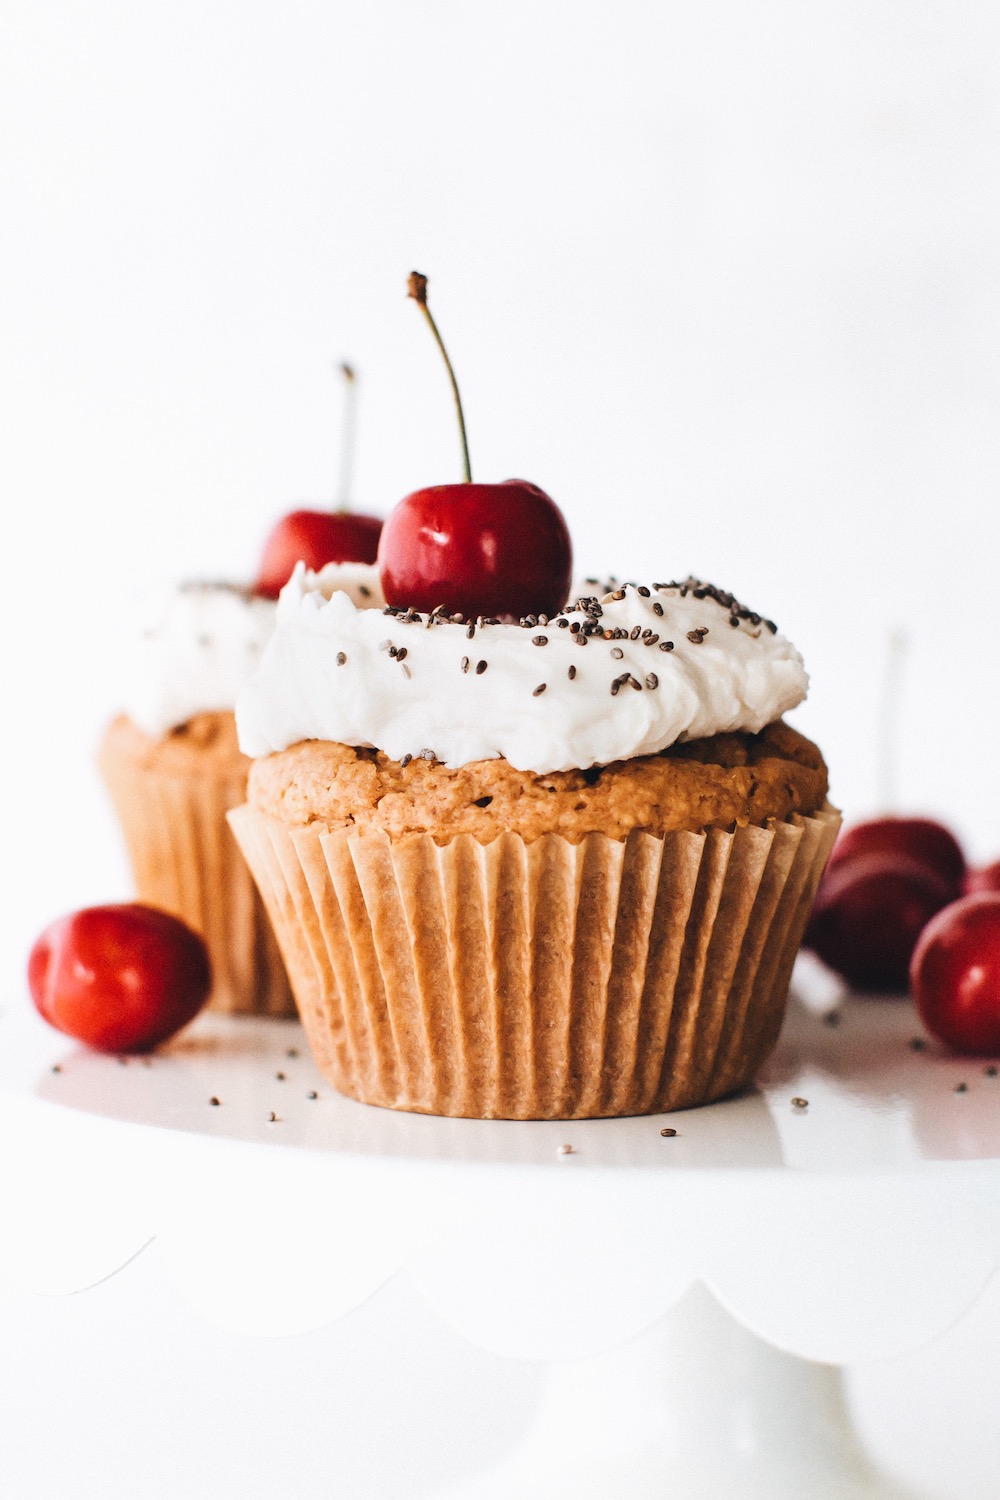 Vegan Vanilla Cupcakes (Gluten-Free and Oil-Free)